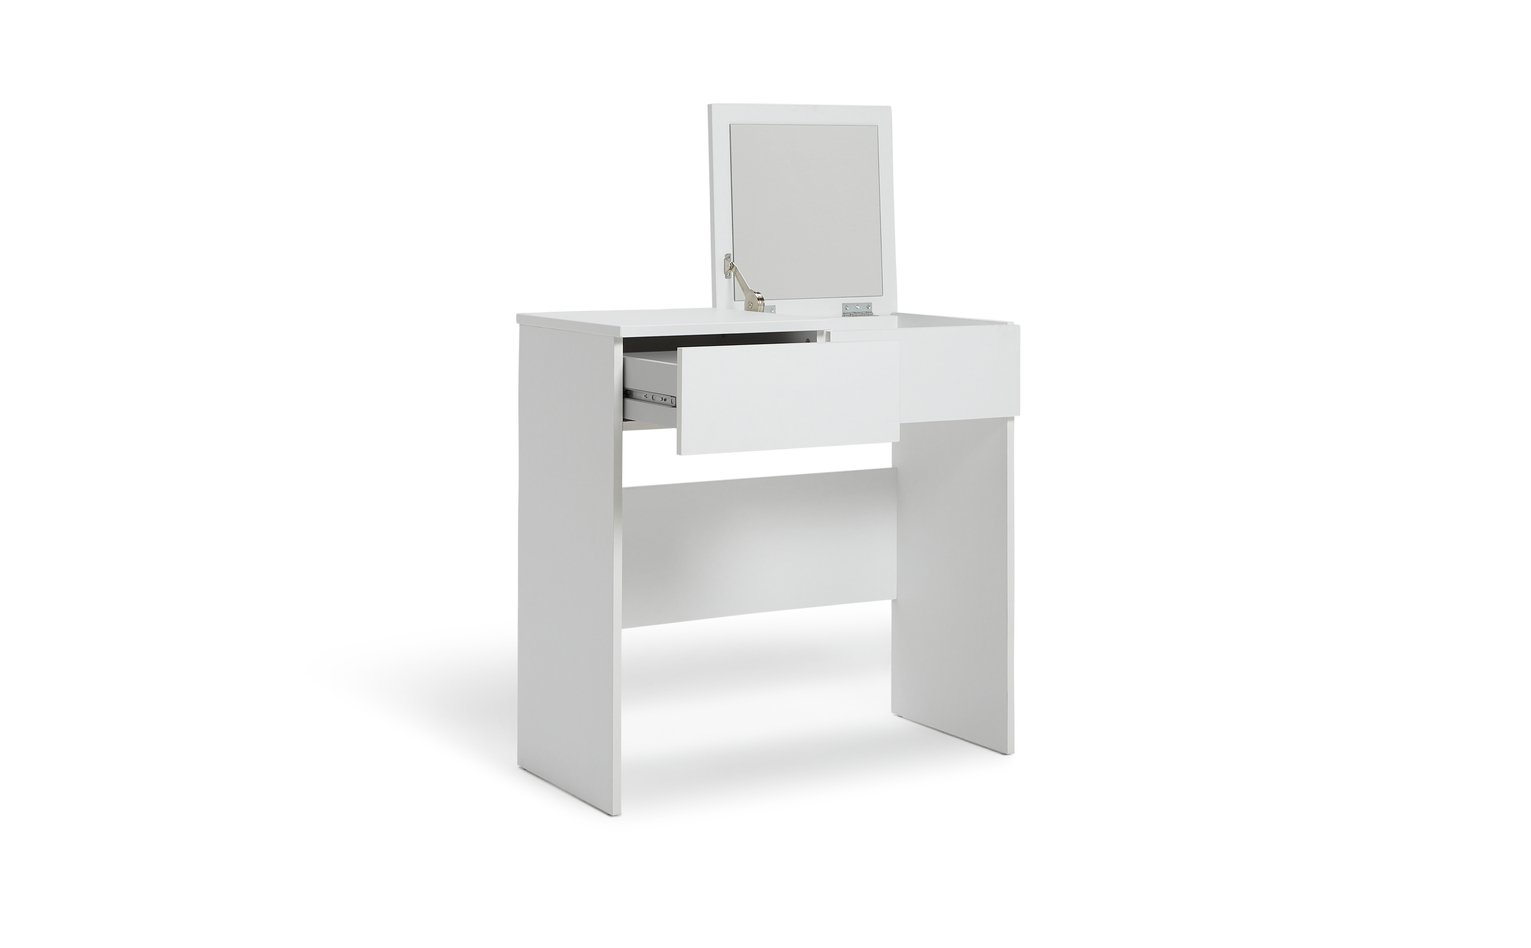 Argos Home Malibu 1 Drawer Dressing Table & Mirror - White